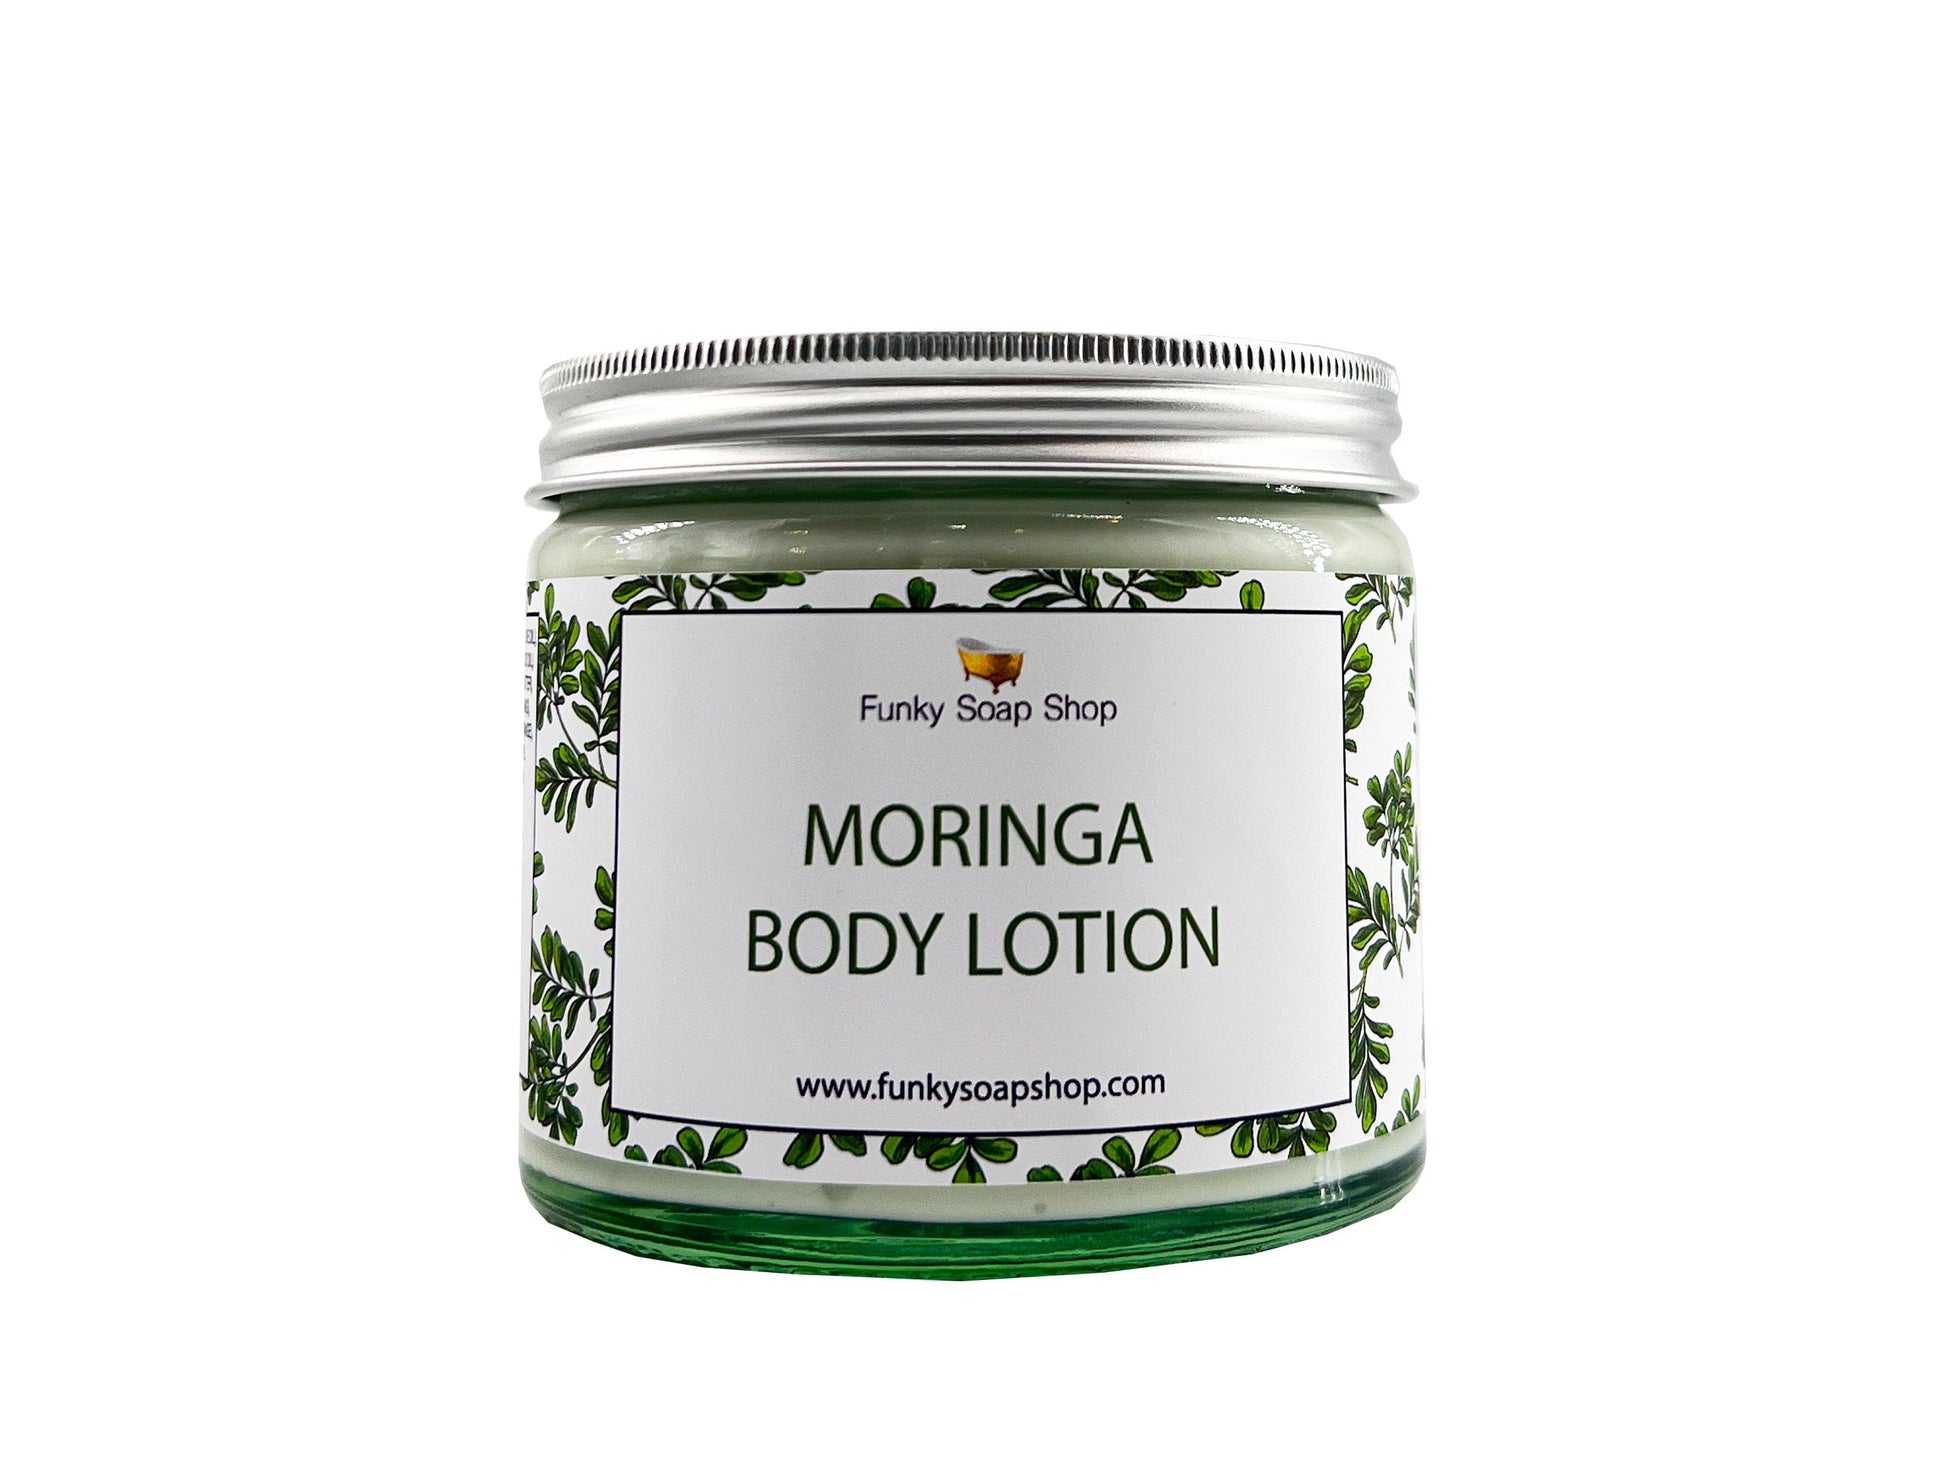 Sweet Moringa Body Lotion, Glass Tub of 250g - Funky Soap Shop